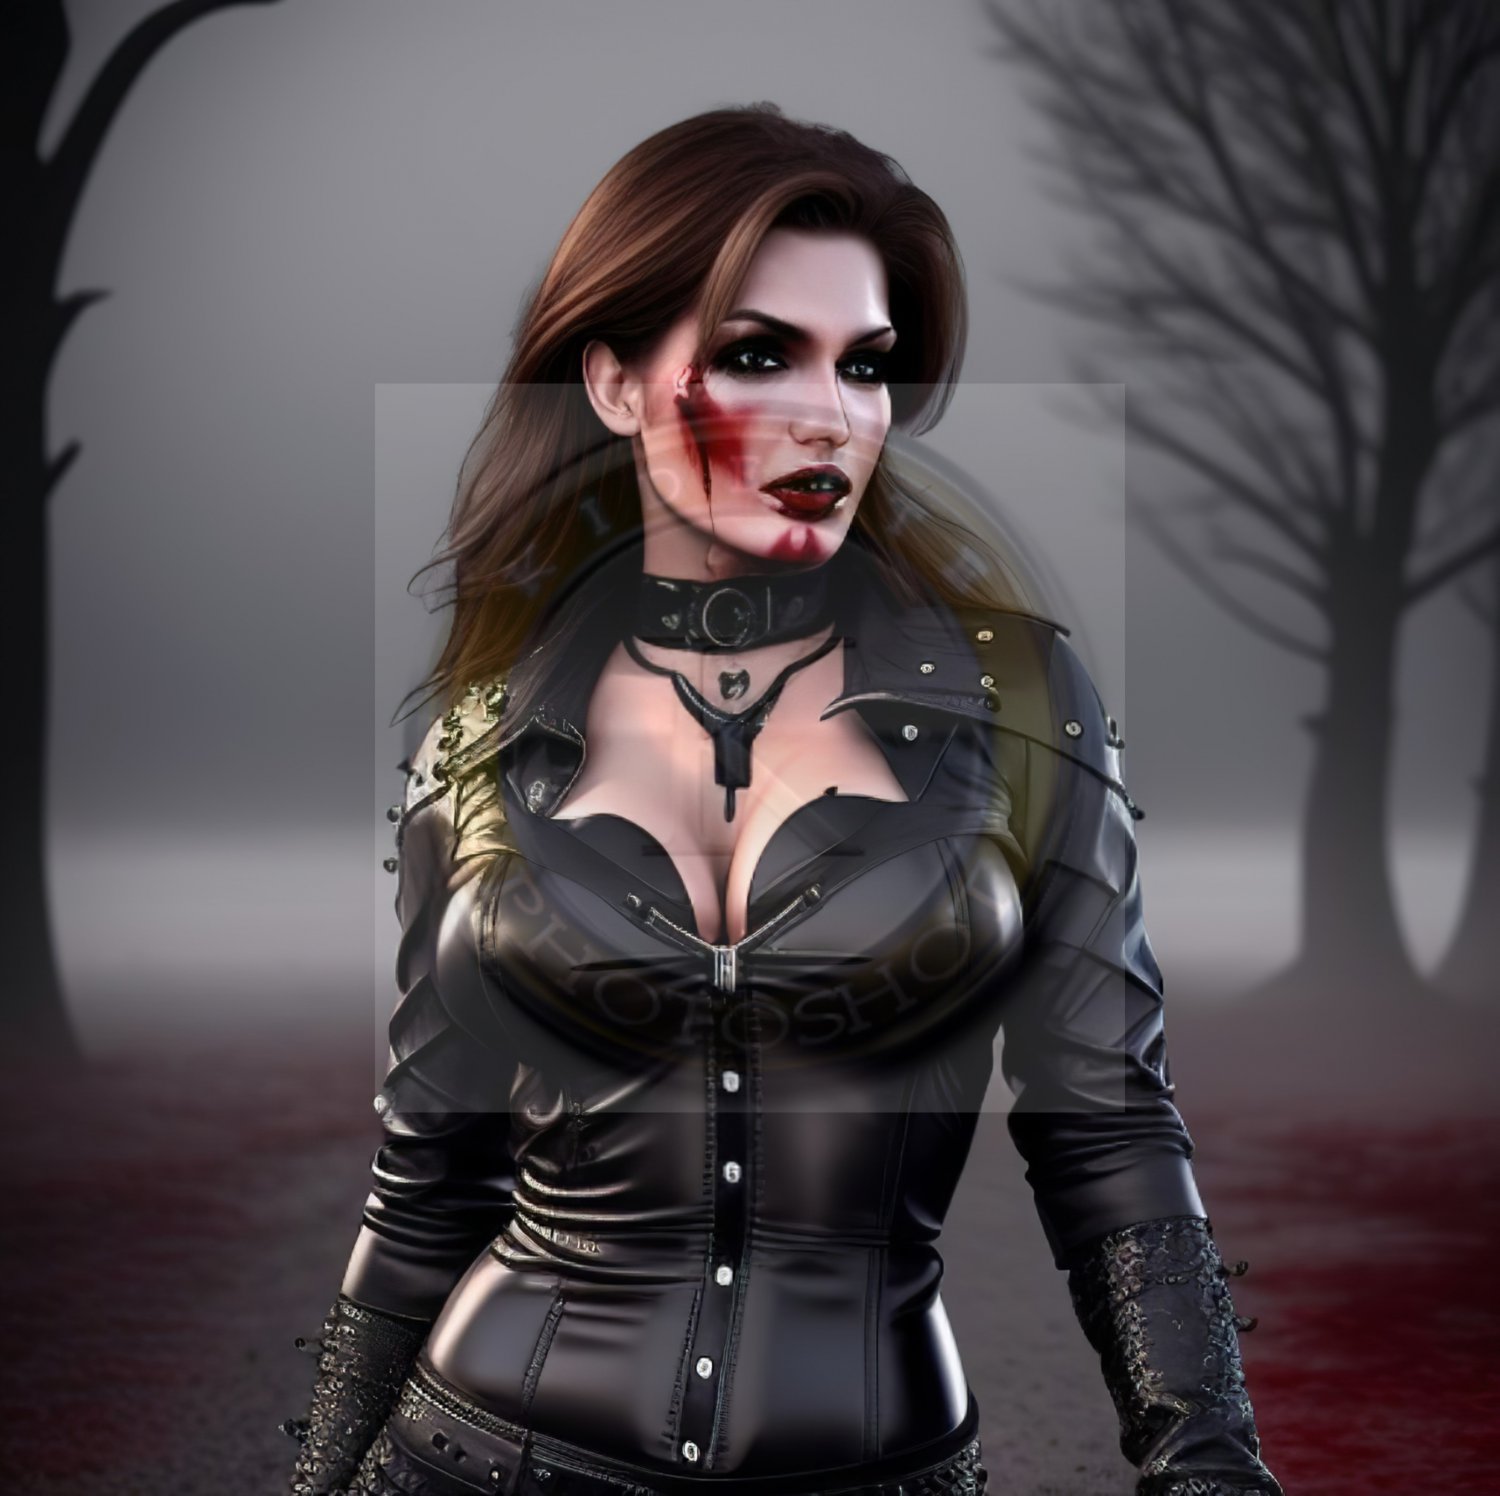 Cindy crawford as vampire lady